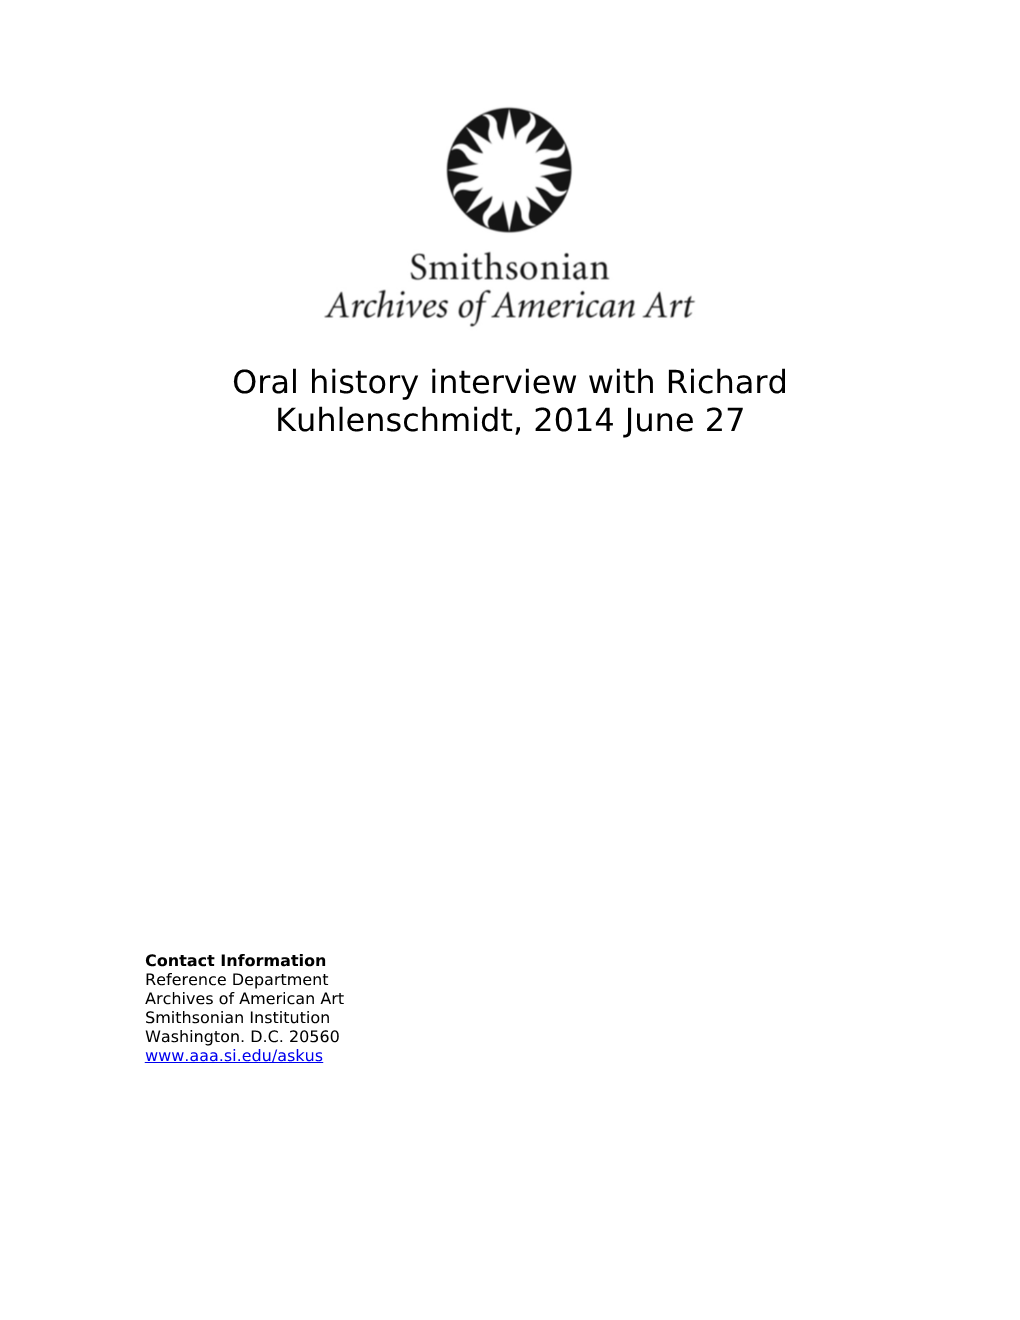 Oral History Interview with Richard Kuhlenschmidt, 2014 June 27